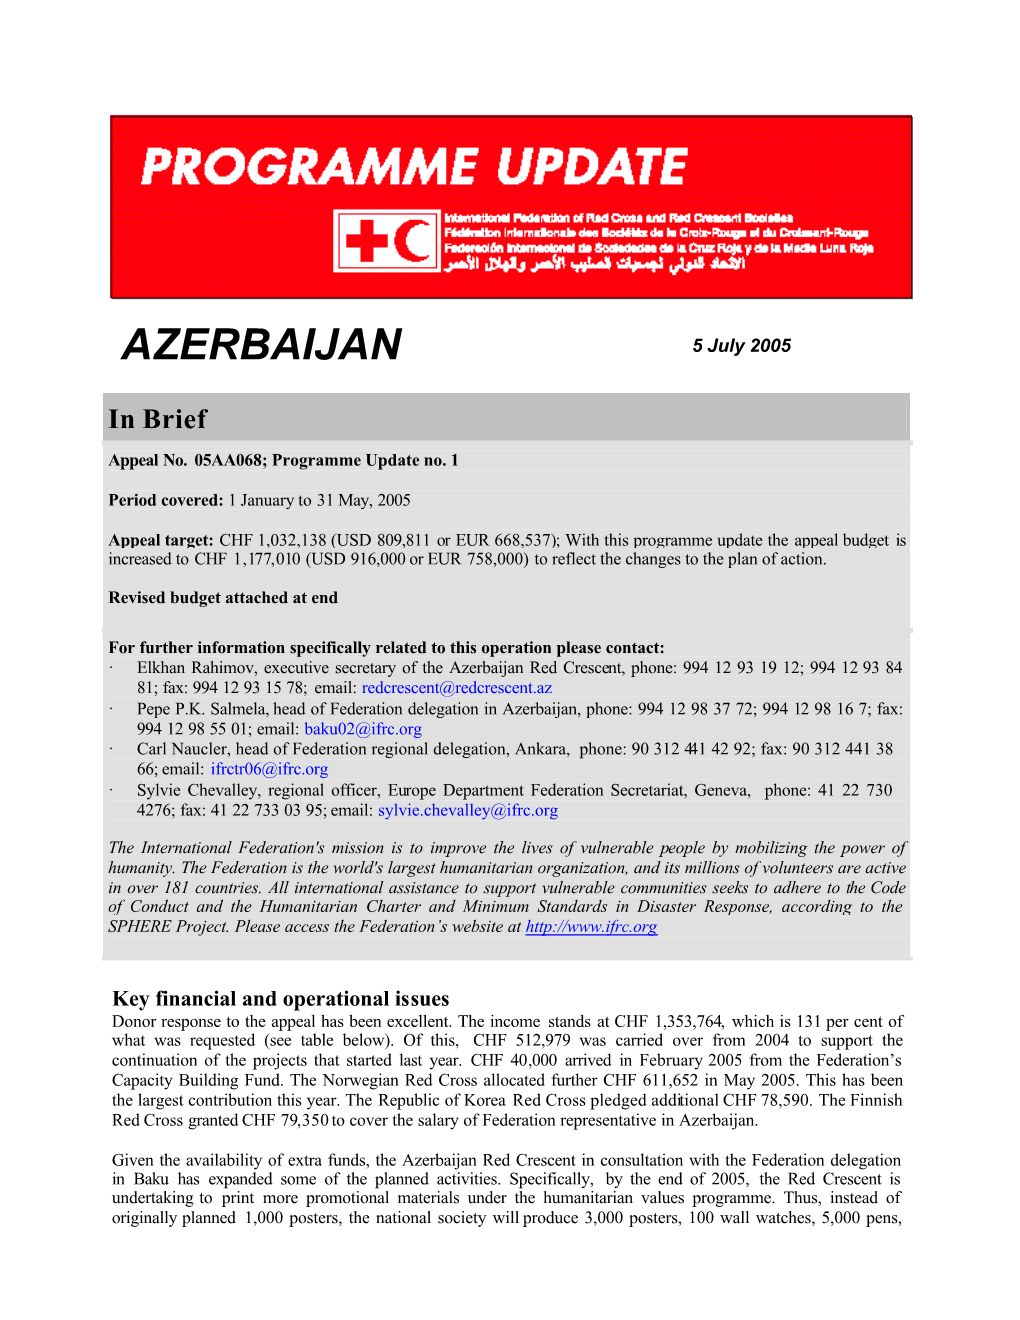 AZERBAIJAN 5 July 2005